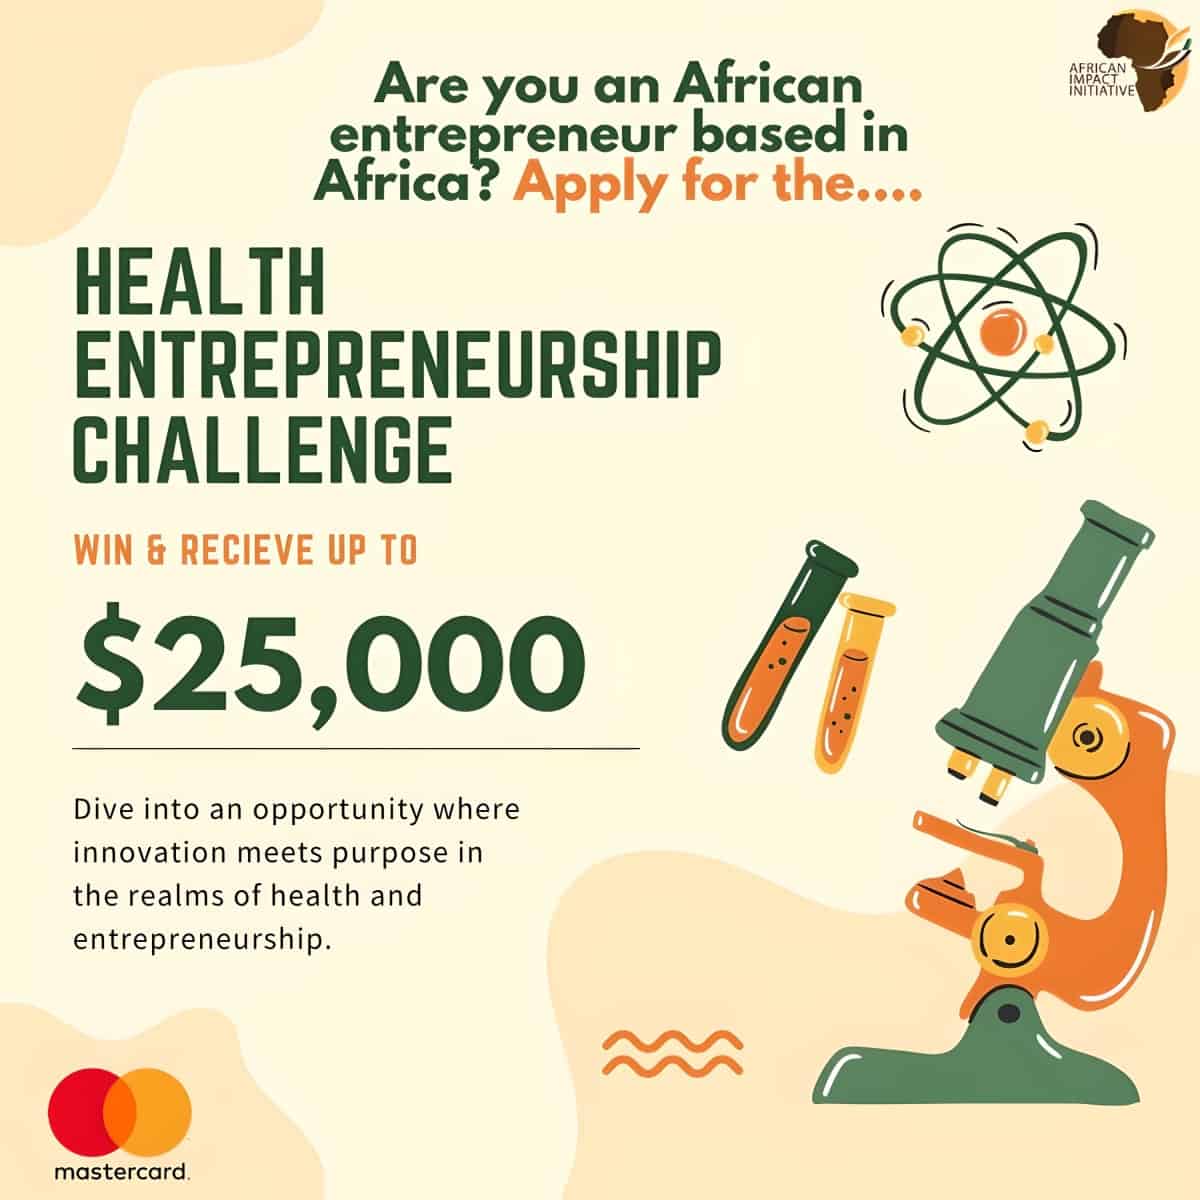 African Impact Initiative Health Entrepreneurship Challenge